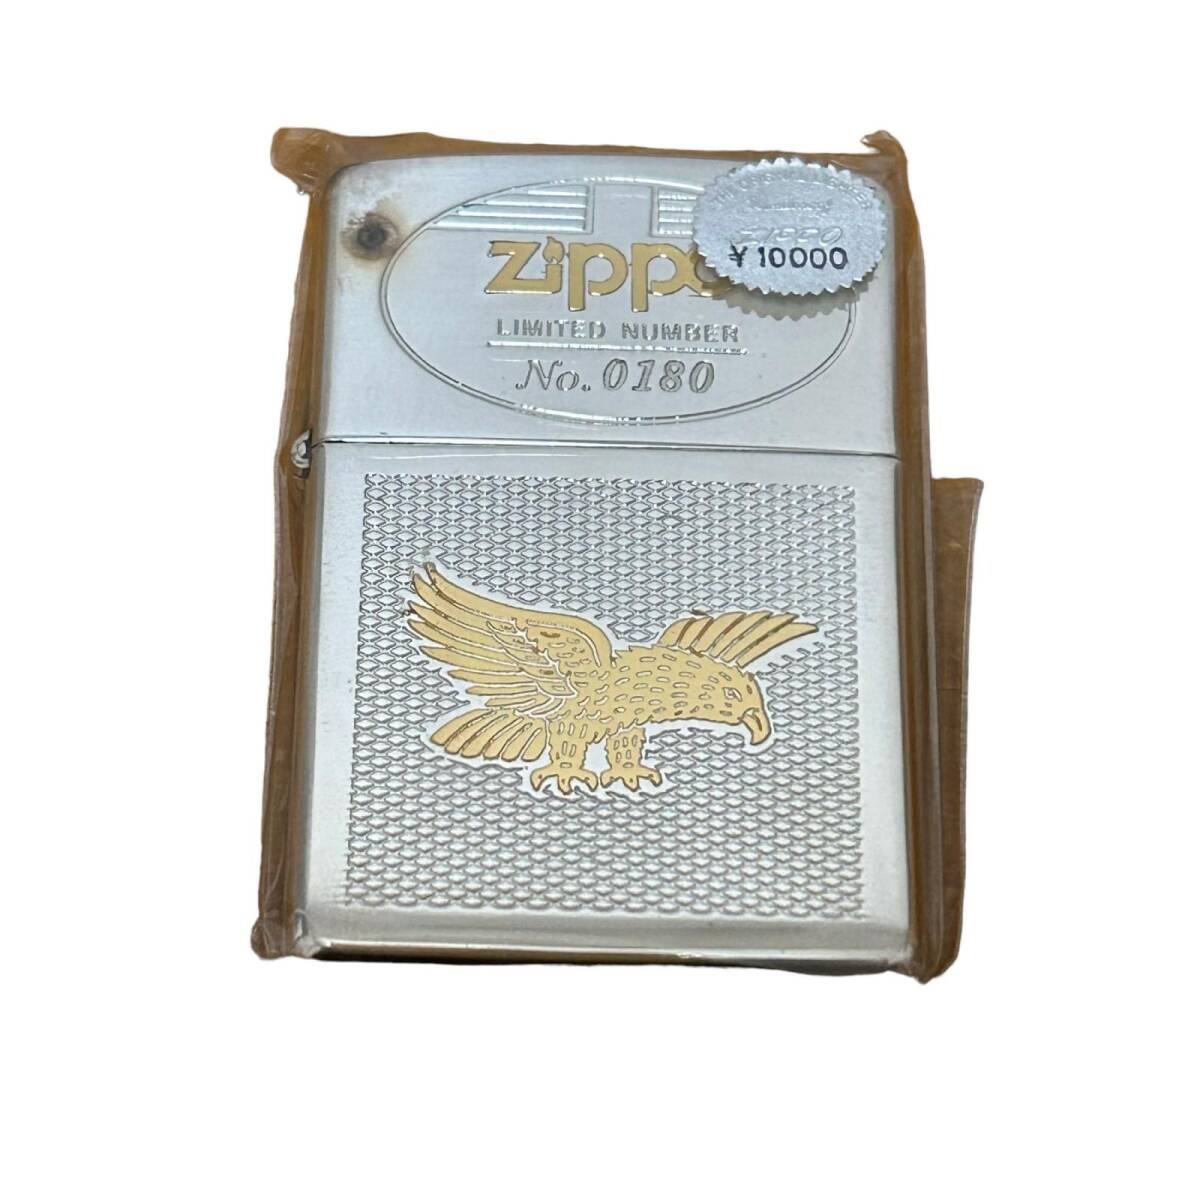 ZIPPO ジッポー ZIPPO ジッポー アメリカンイーグル 携帯灰皿付き 限定版 1995年製造 ライターの画像2